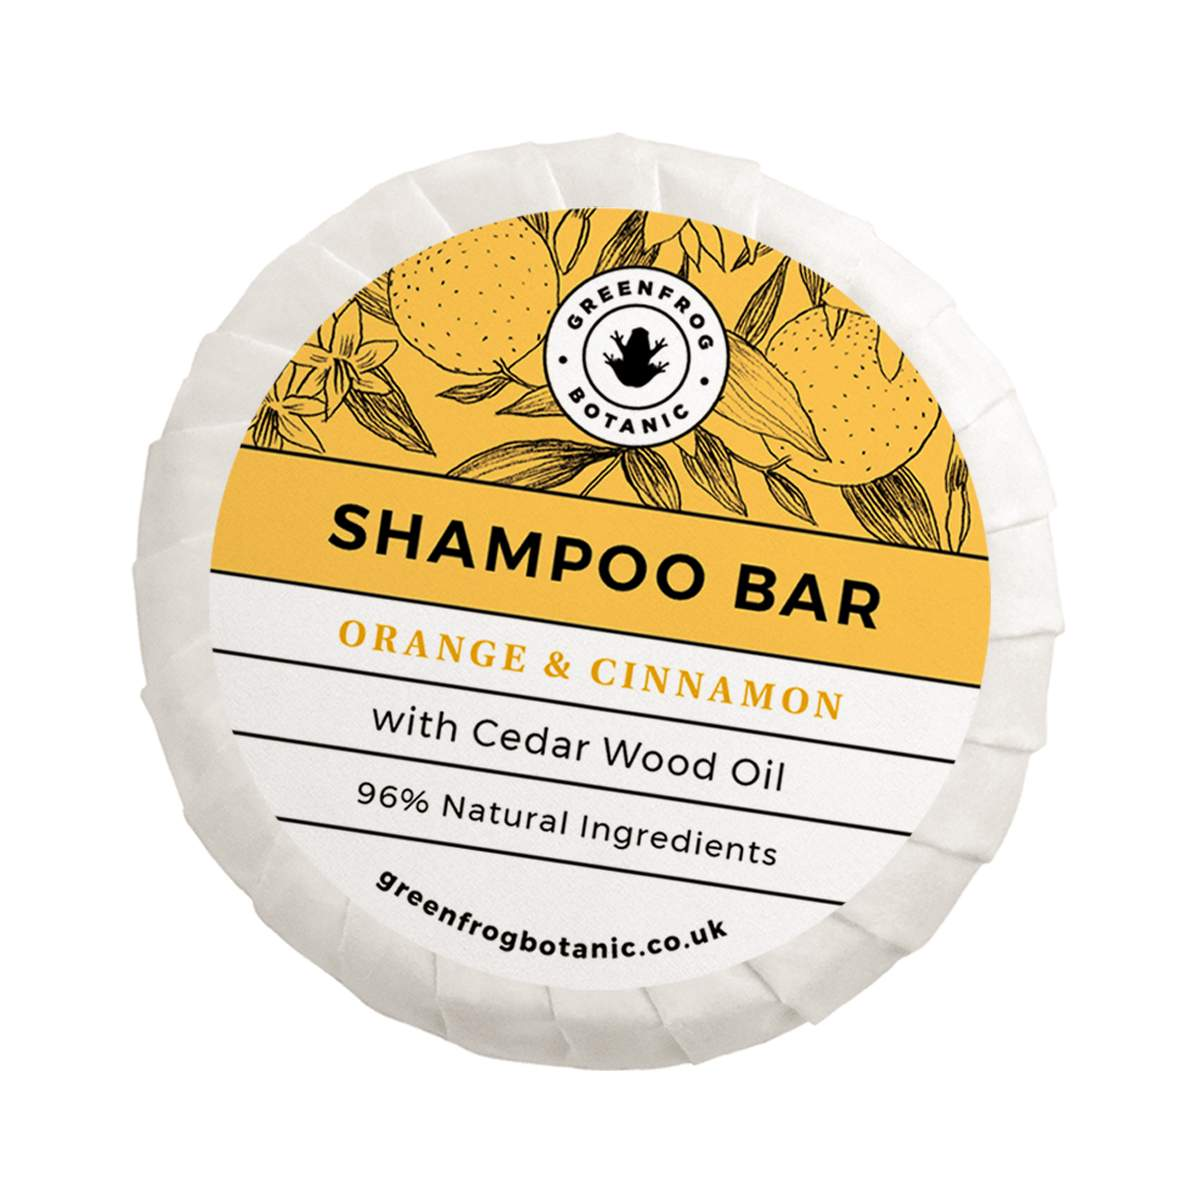 Greenfrog Botanic Shampoo bar -Orange and Cinnamon